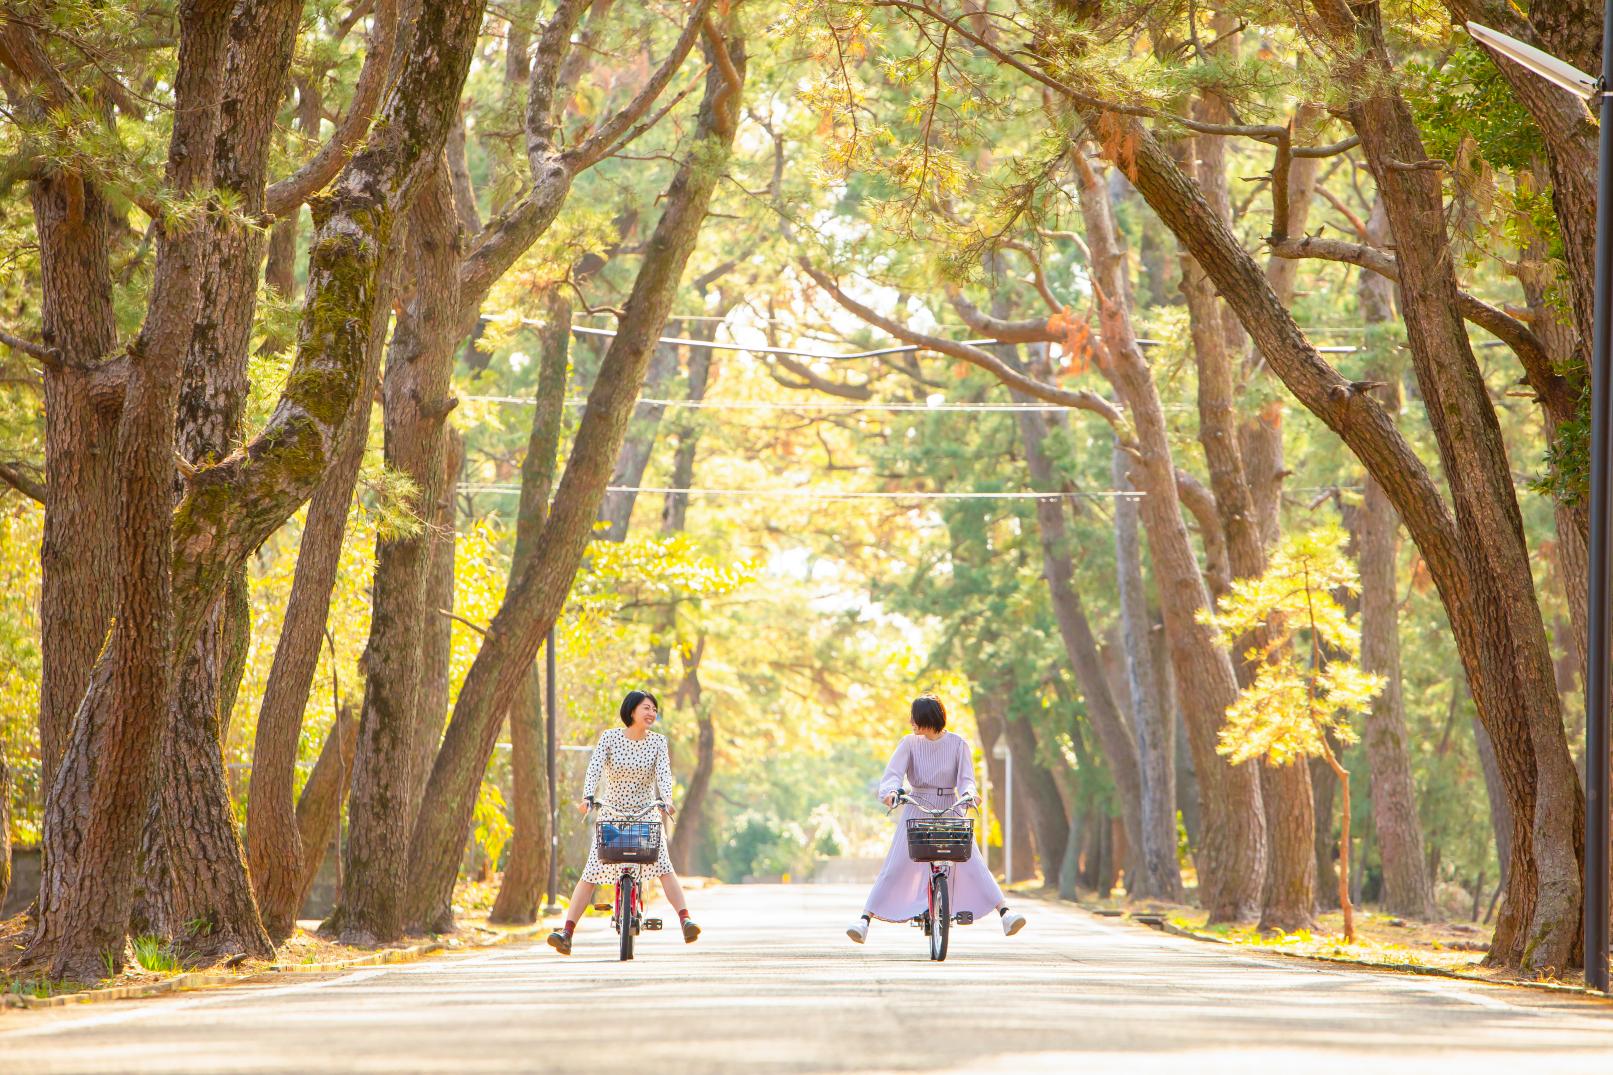 Avenue of Pines - Hime no Matsubara-1